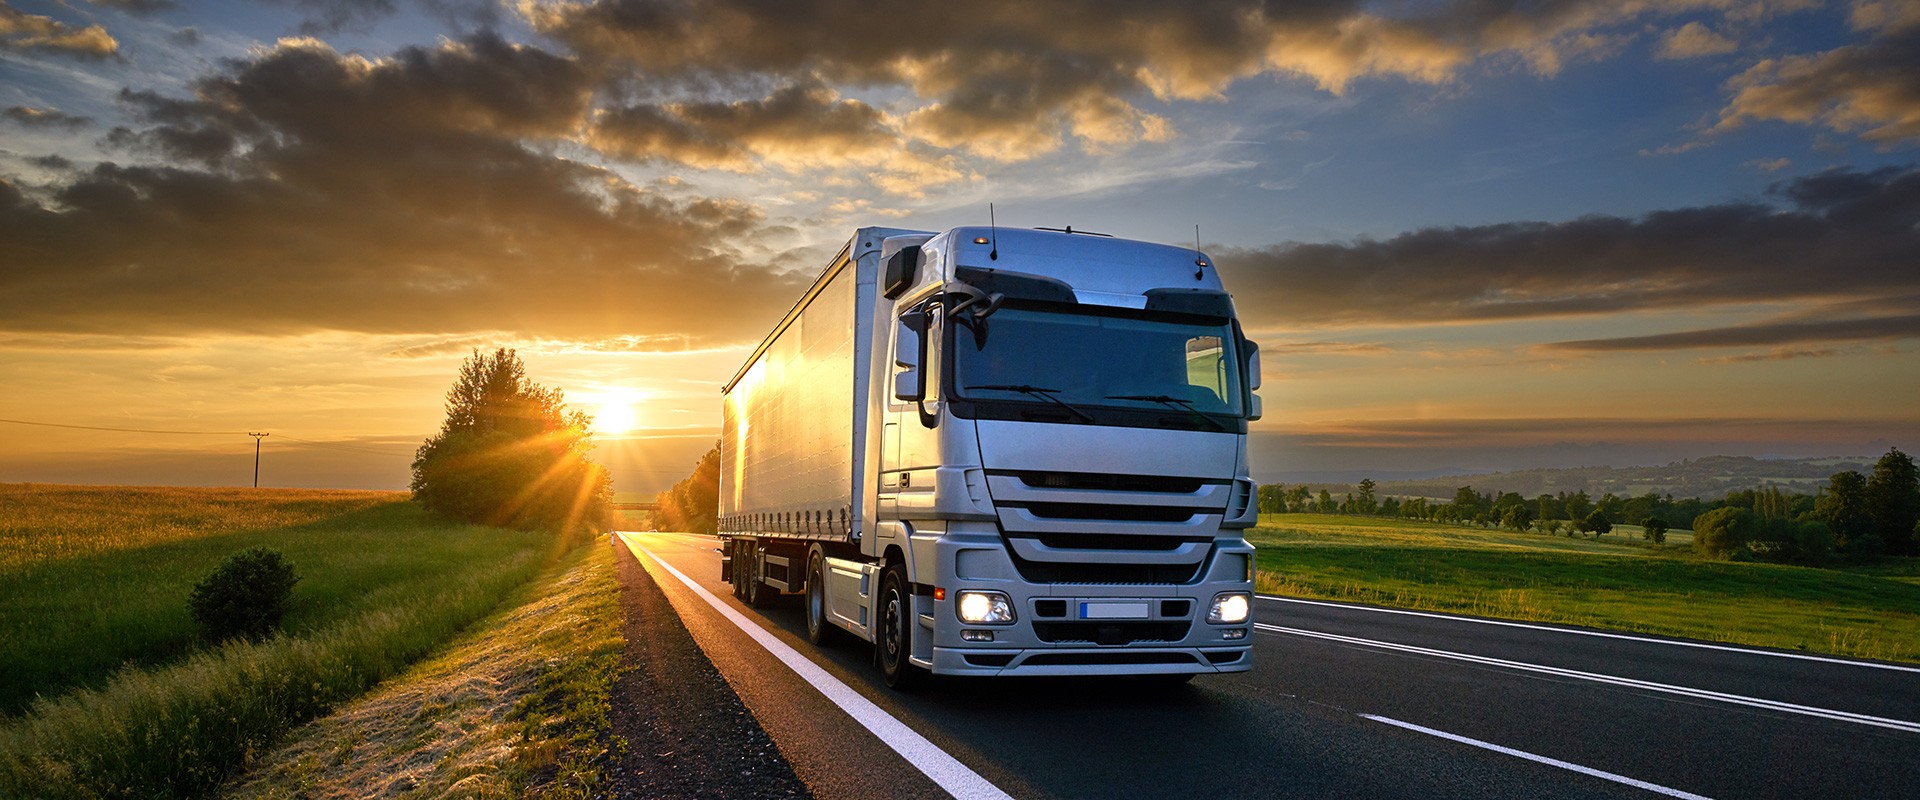 On Highway Truck Industry